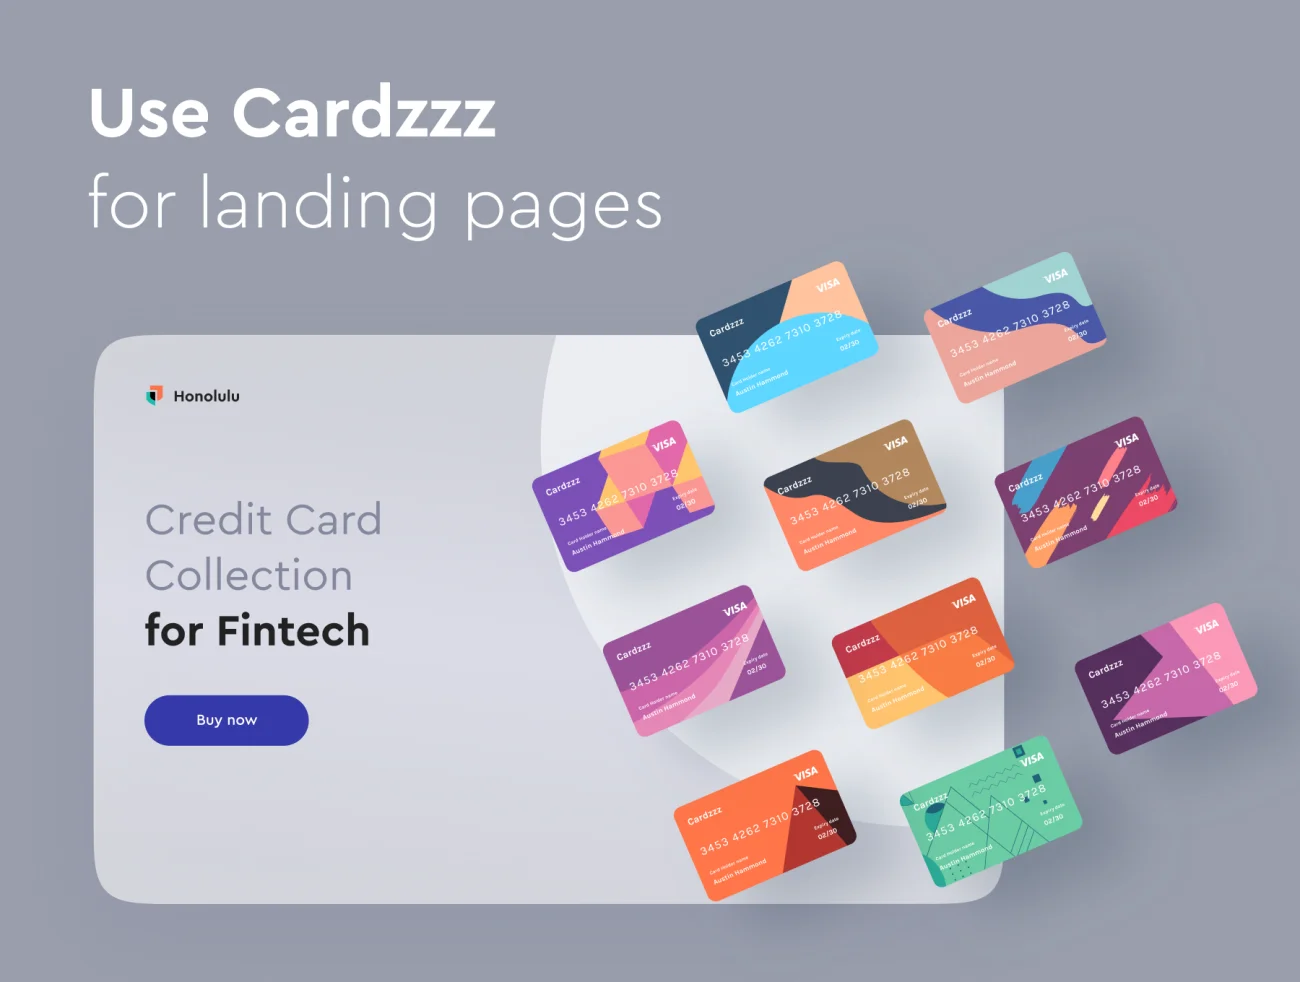 Cardzzz fintech and E-wallet card 100款银行卡信用卡矢量抽象图案插画界面-商业金融、学习生活、插画、插画功能、插画风格、教育医疗、概念创意、金融理财-到位啦UI